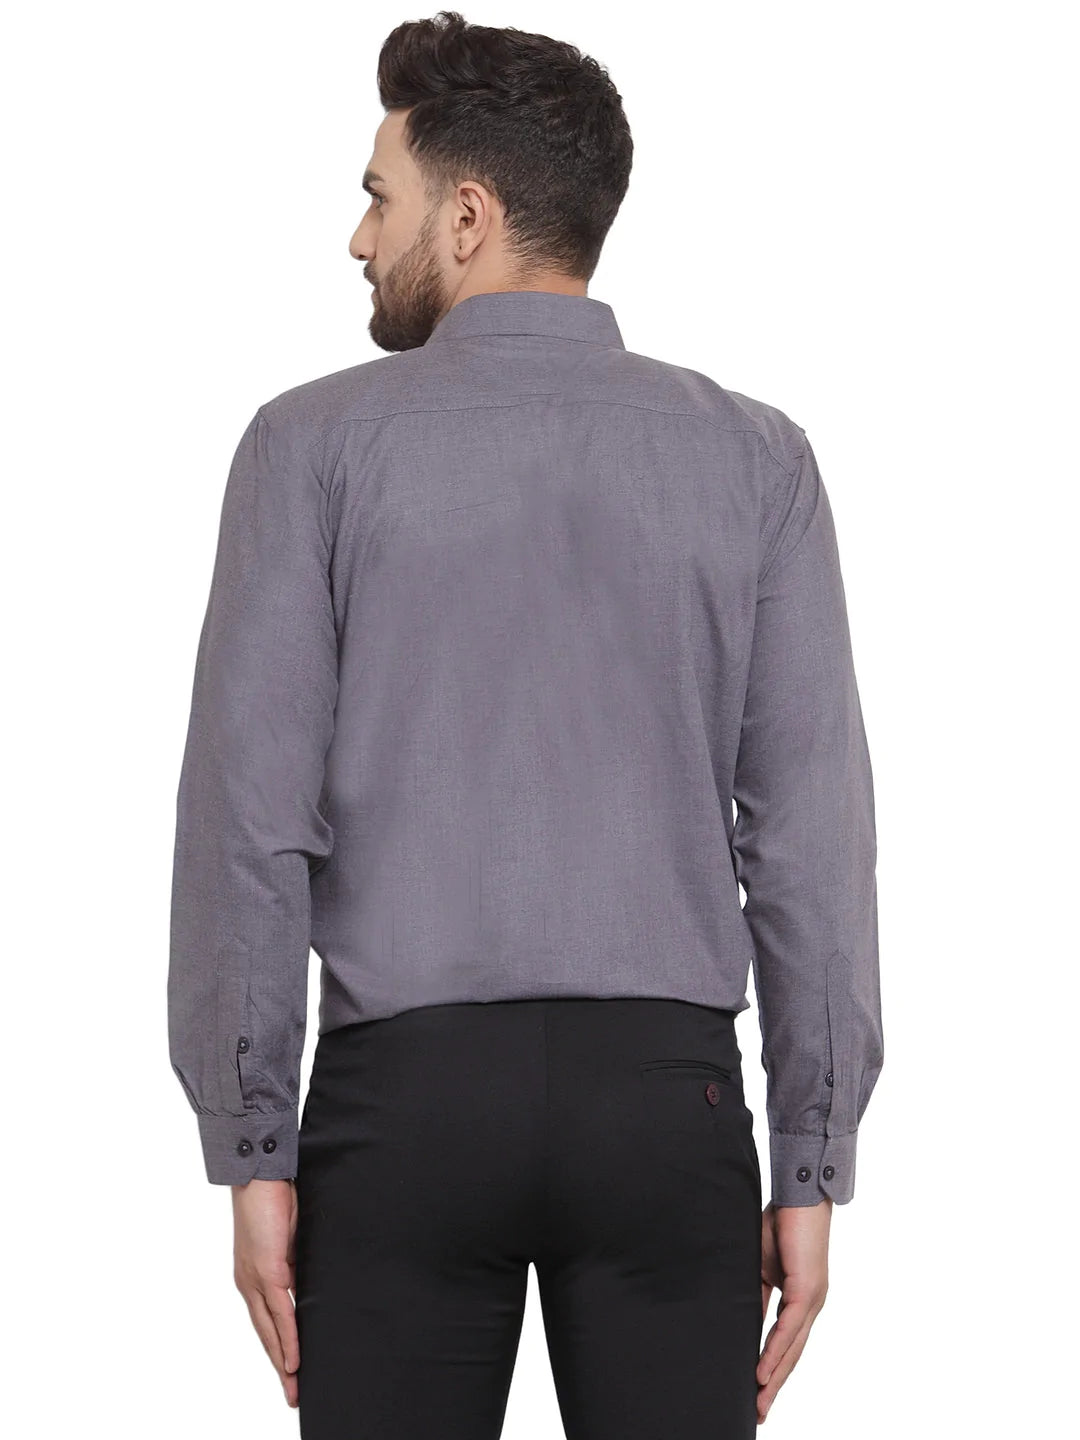 Jainish Men's Cotton Solid Charcoal Grey Formal Shirt's ( SF 361Charcoal )